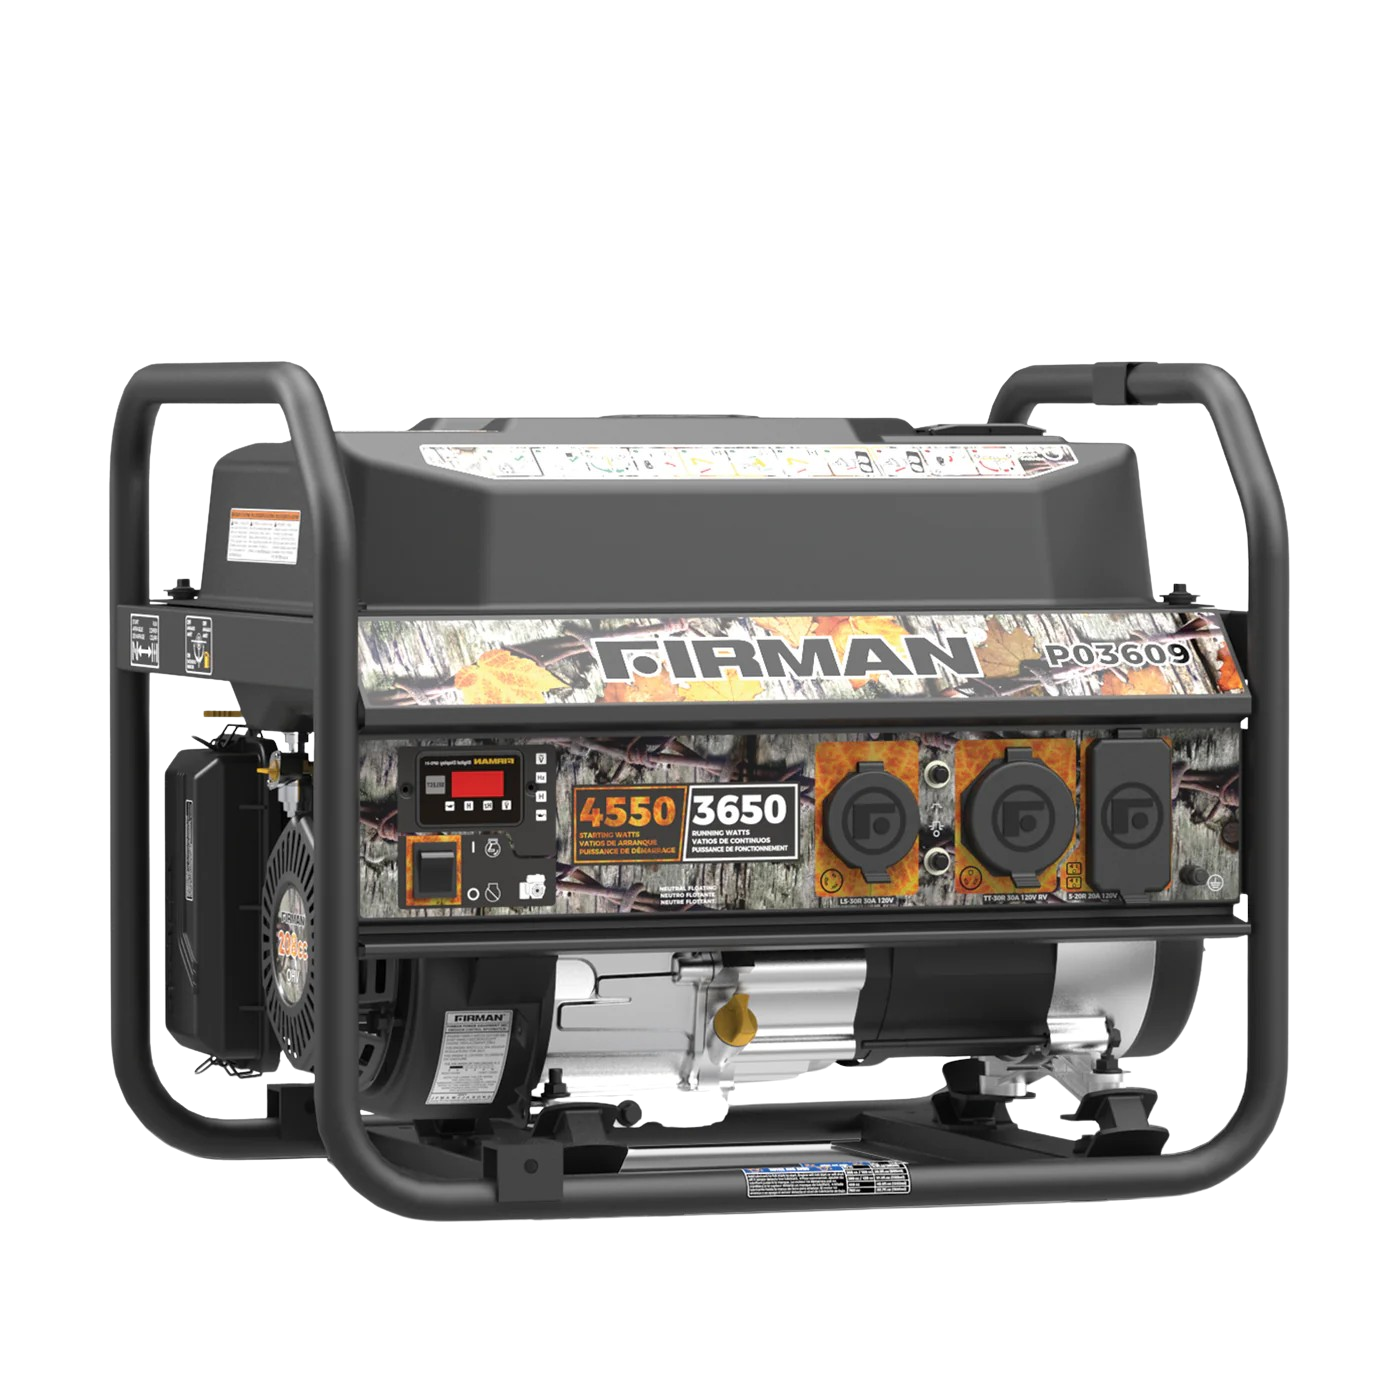 Firman P03609 3650W/4550W Gas Portable Generator Camo Manufacturer RFB